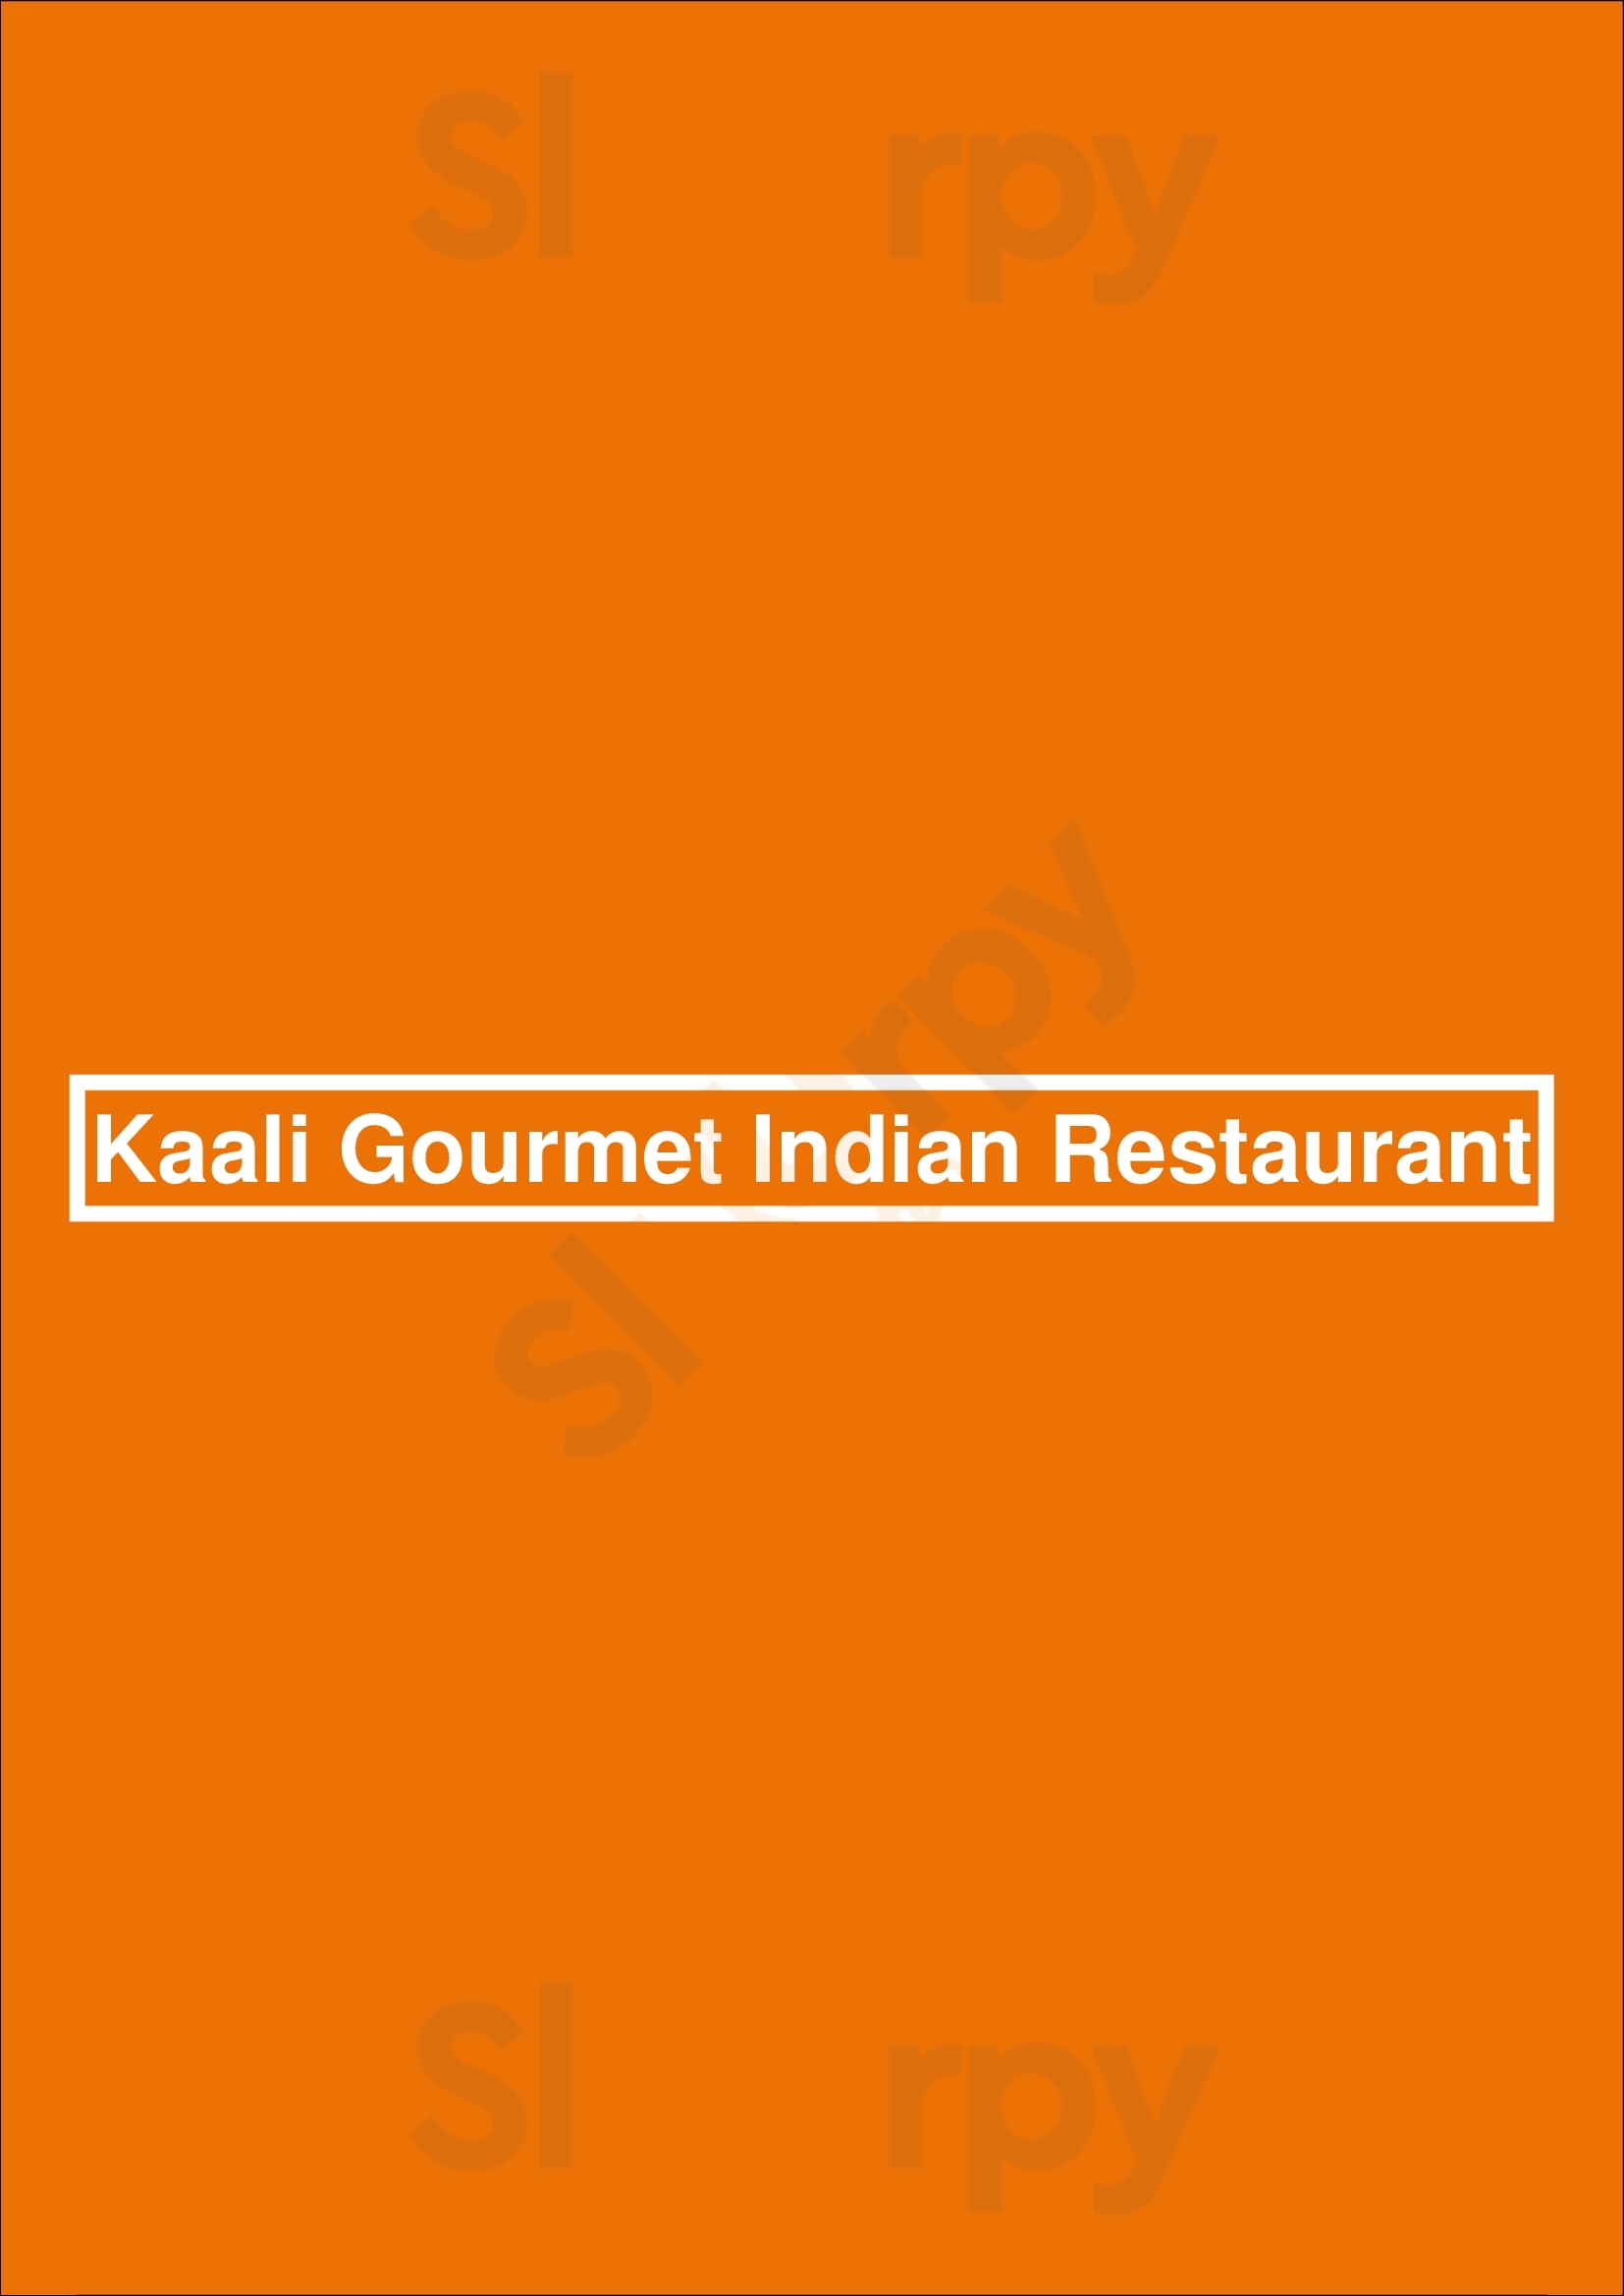 Kaali Gourmet Indian Restaurant Noosa Menu - 1